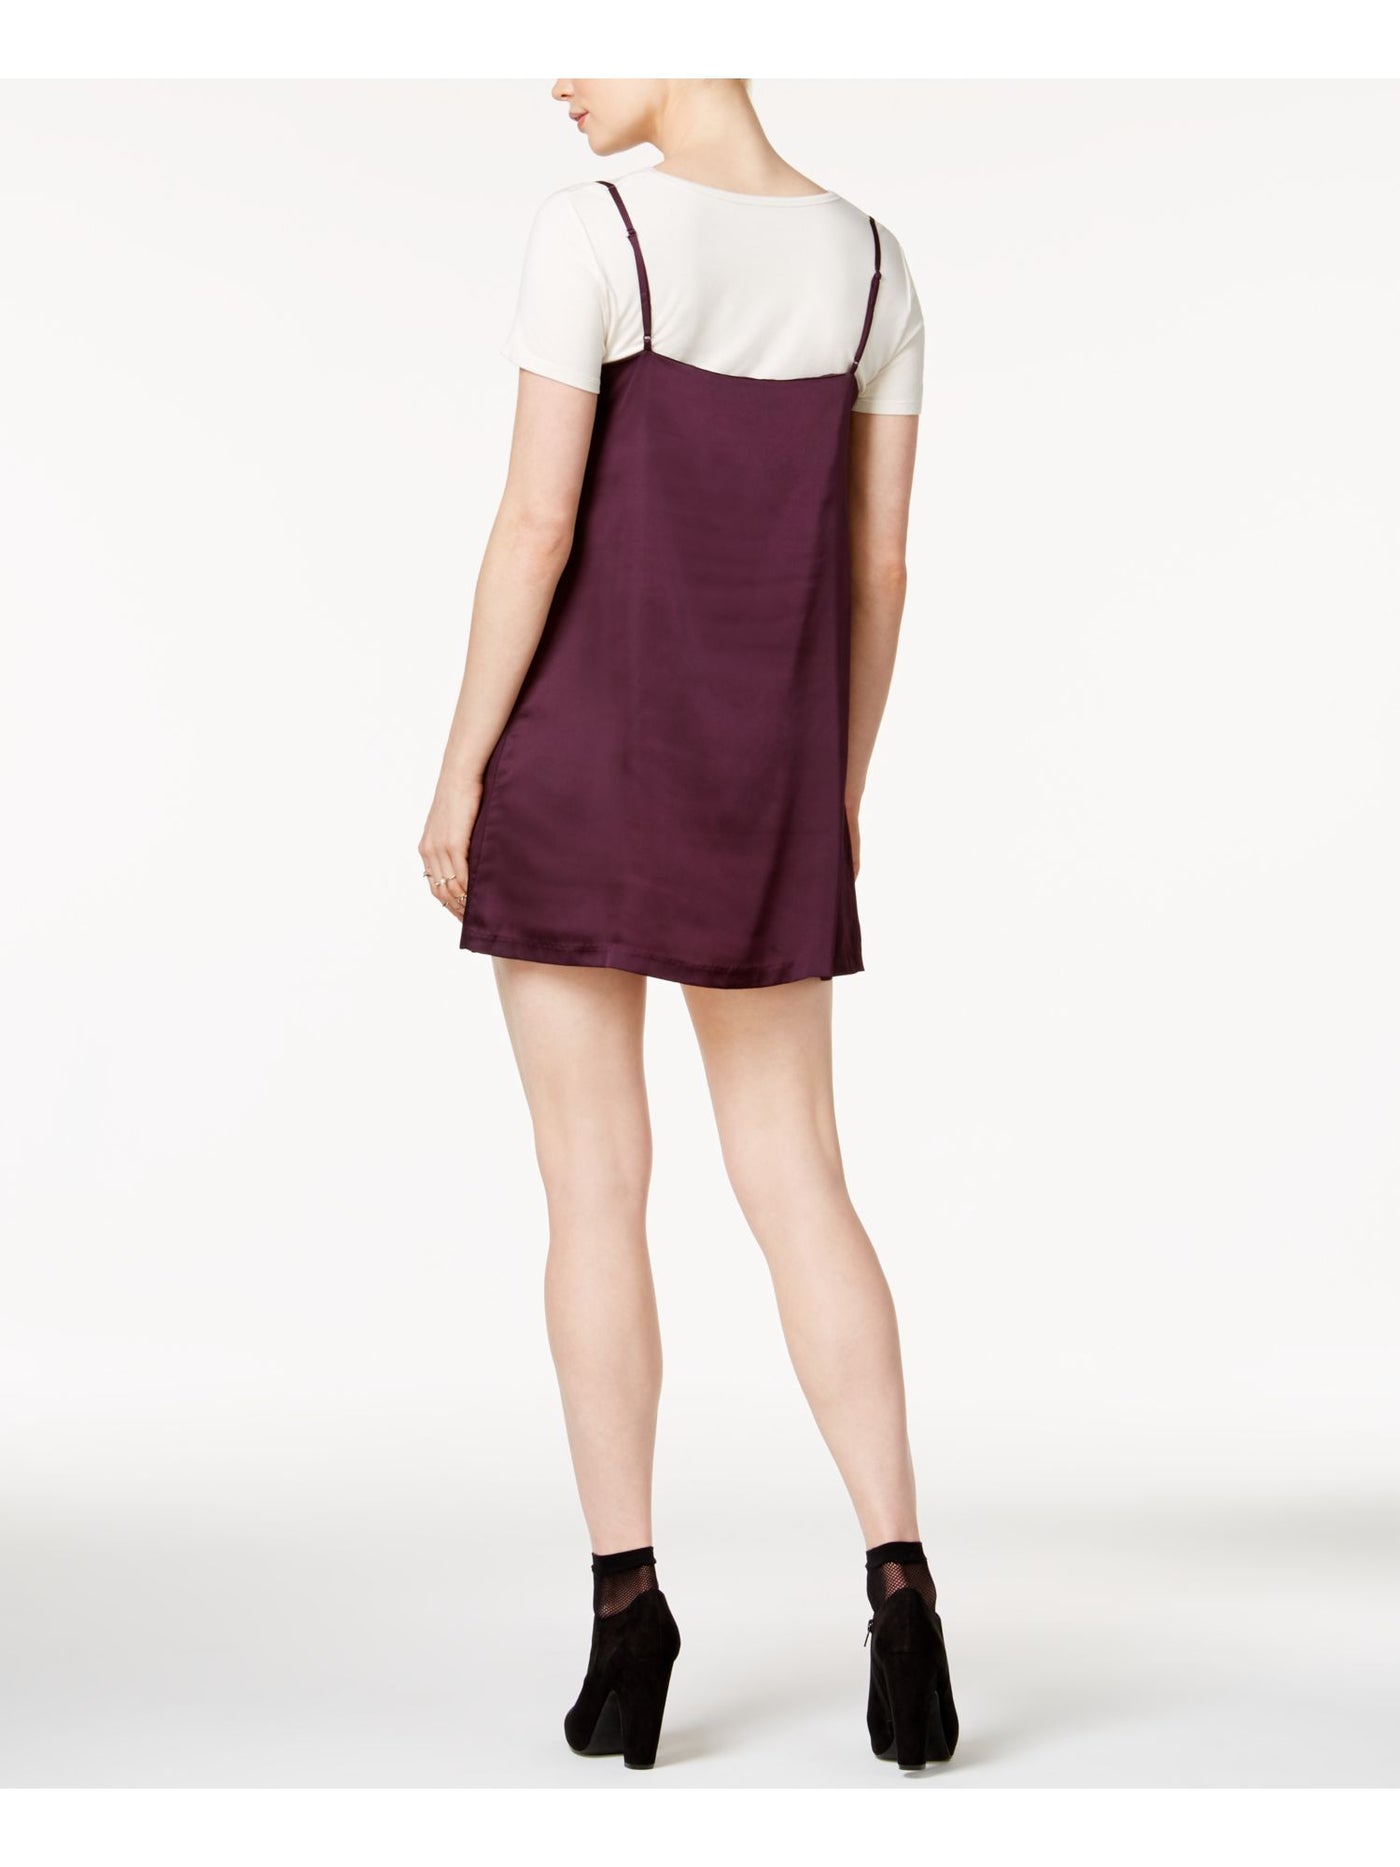 KENSIE Womens Purple Short Sleeve Jewel Neck Above The Knee Shift Dress Size: S